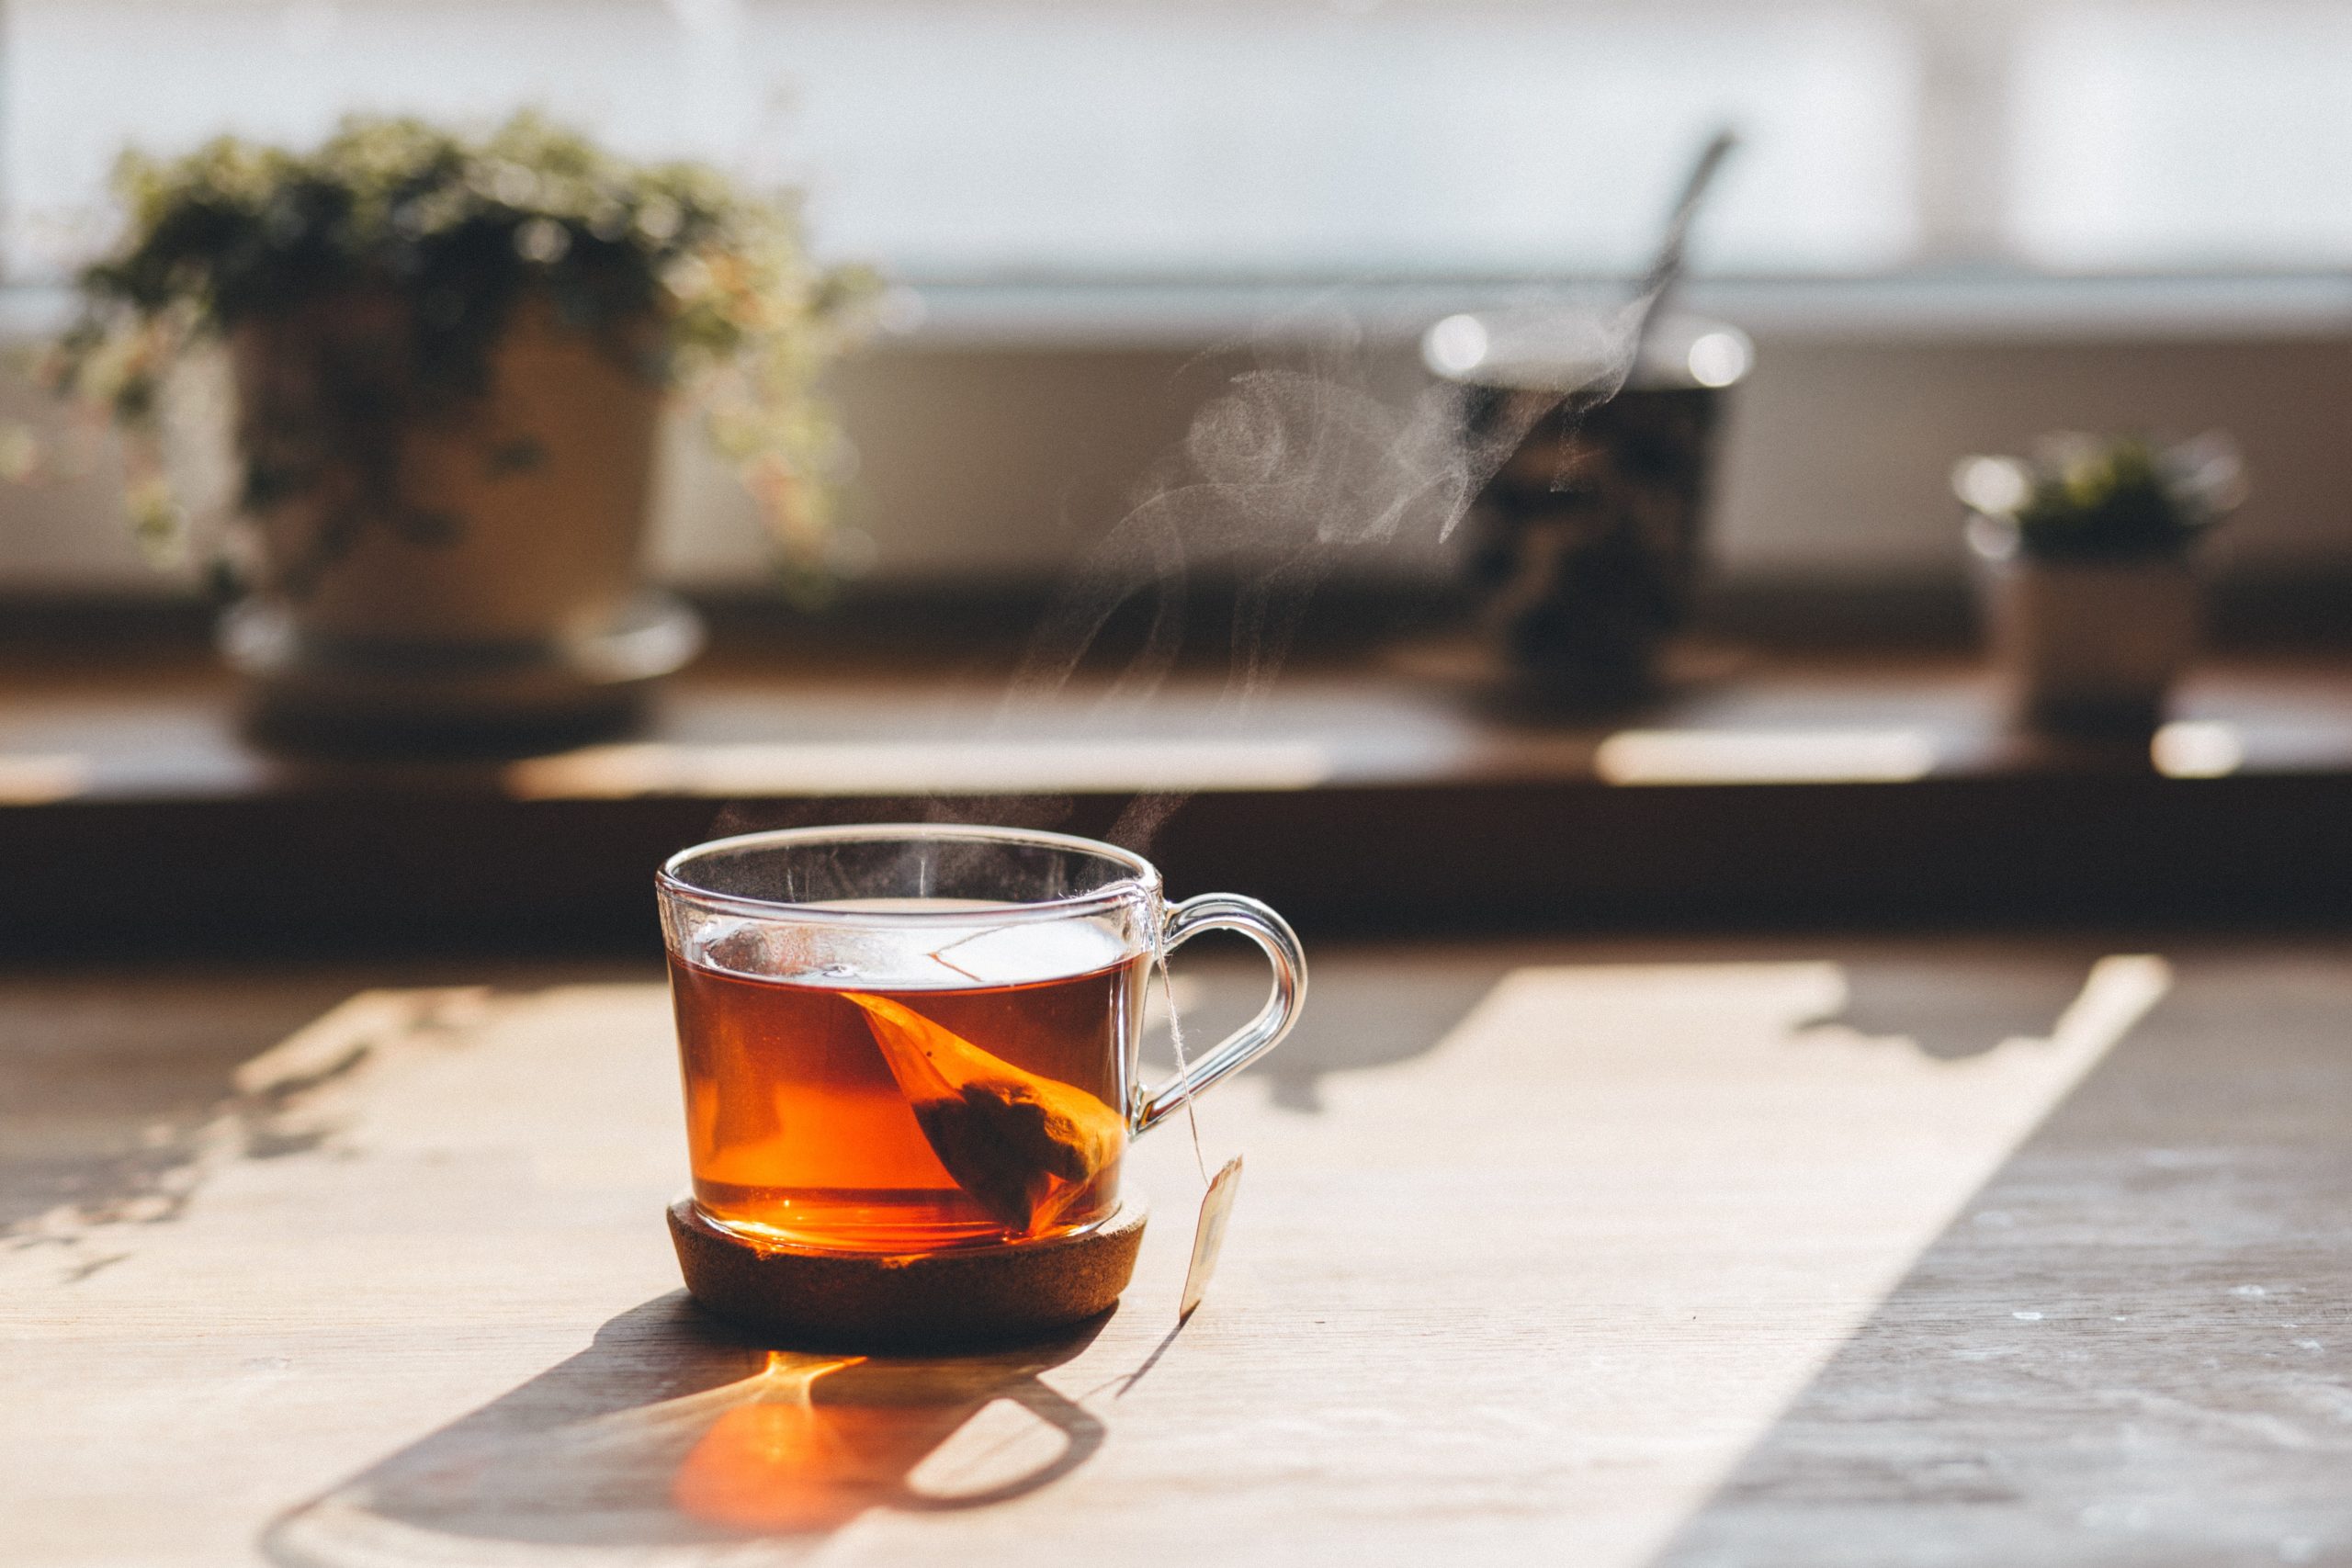 Tea and Health